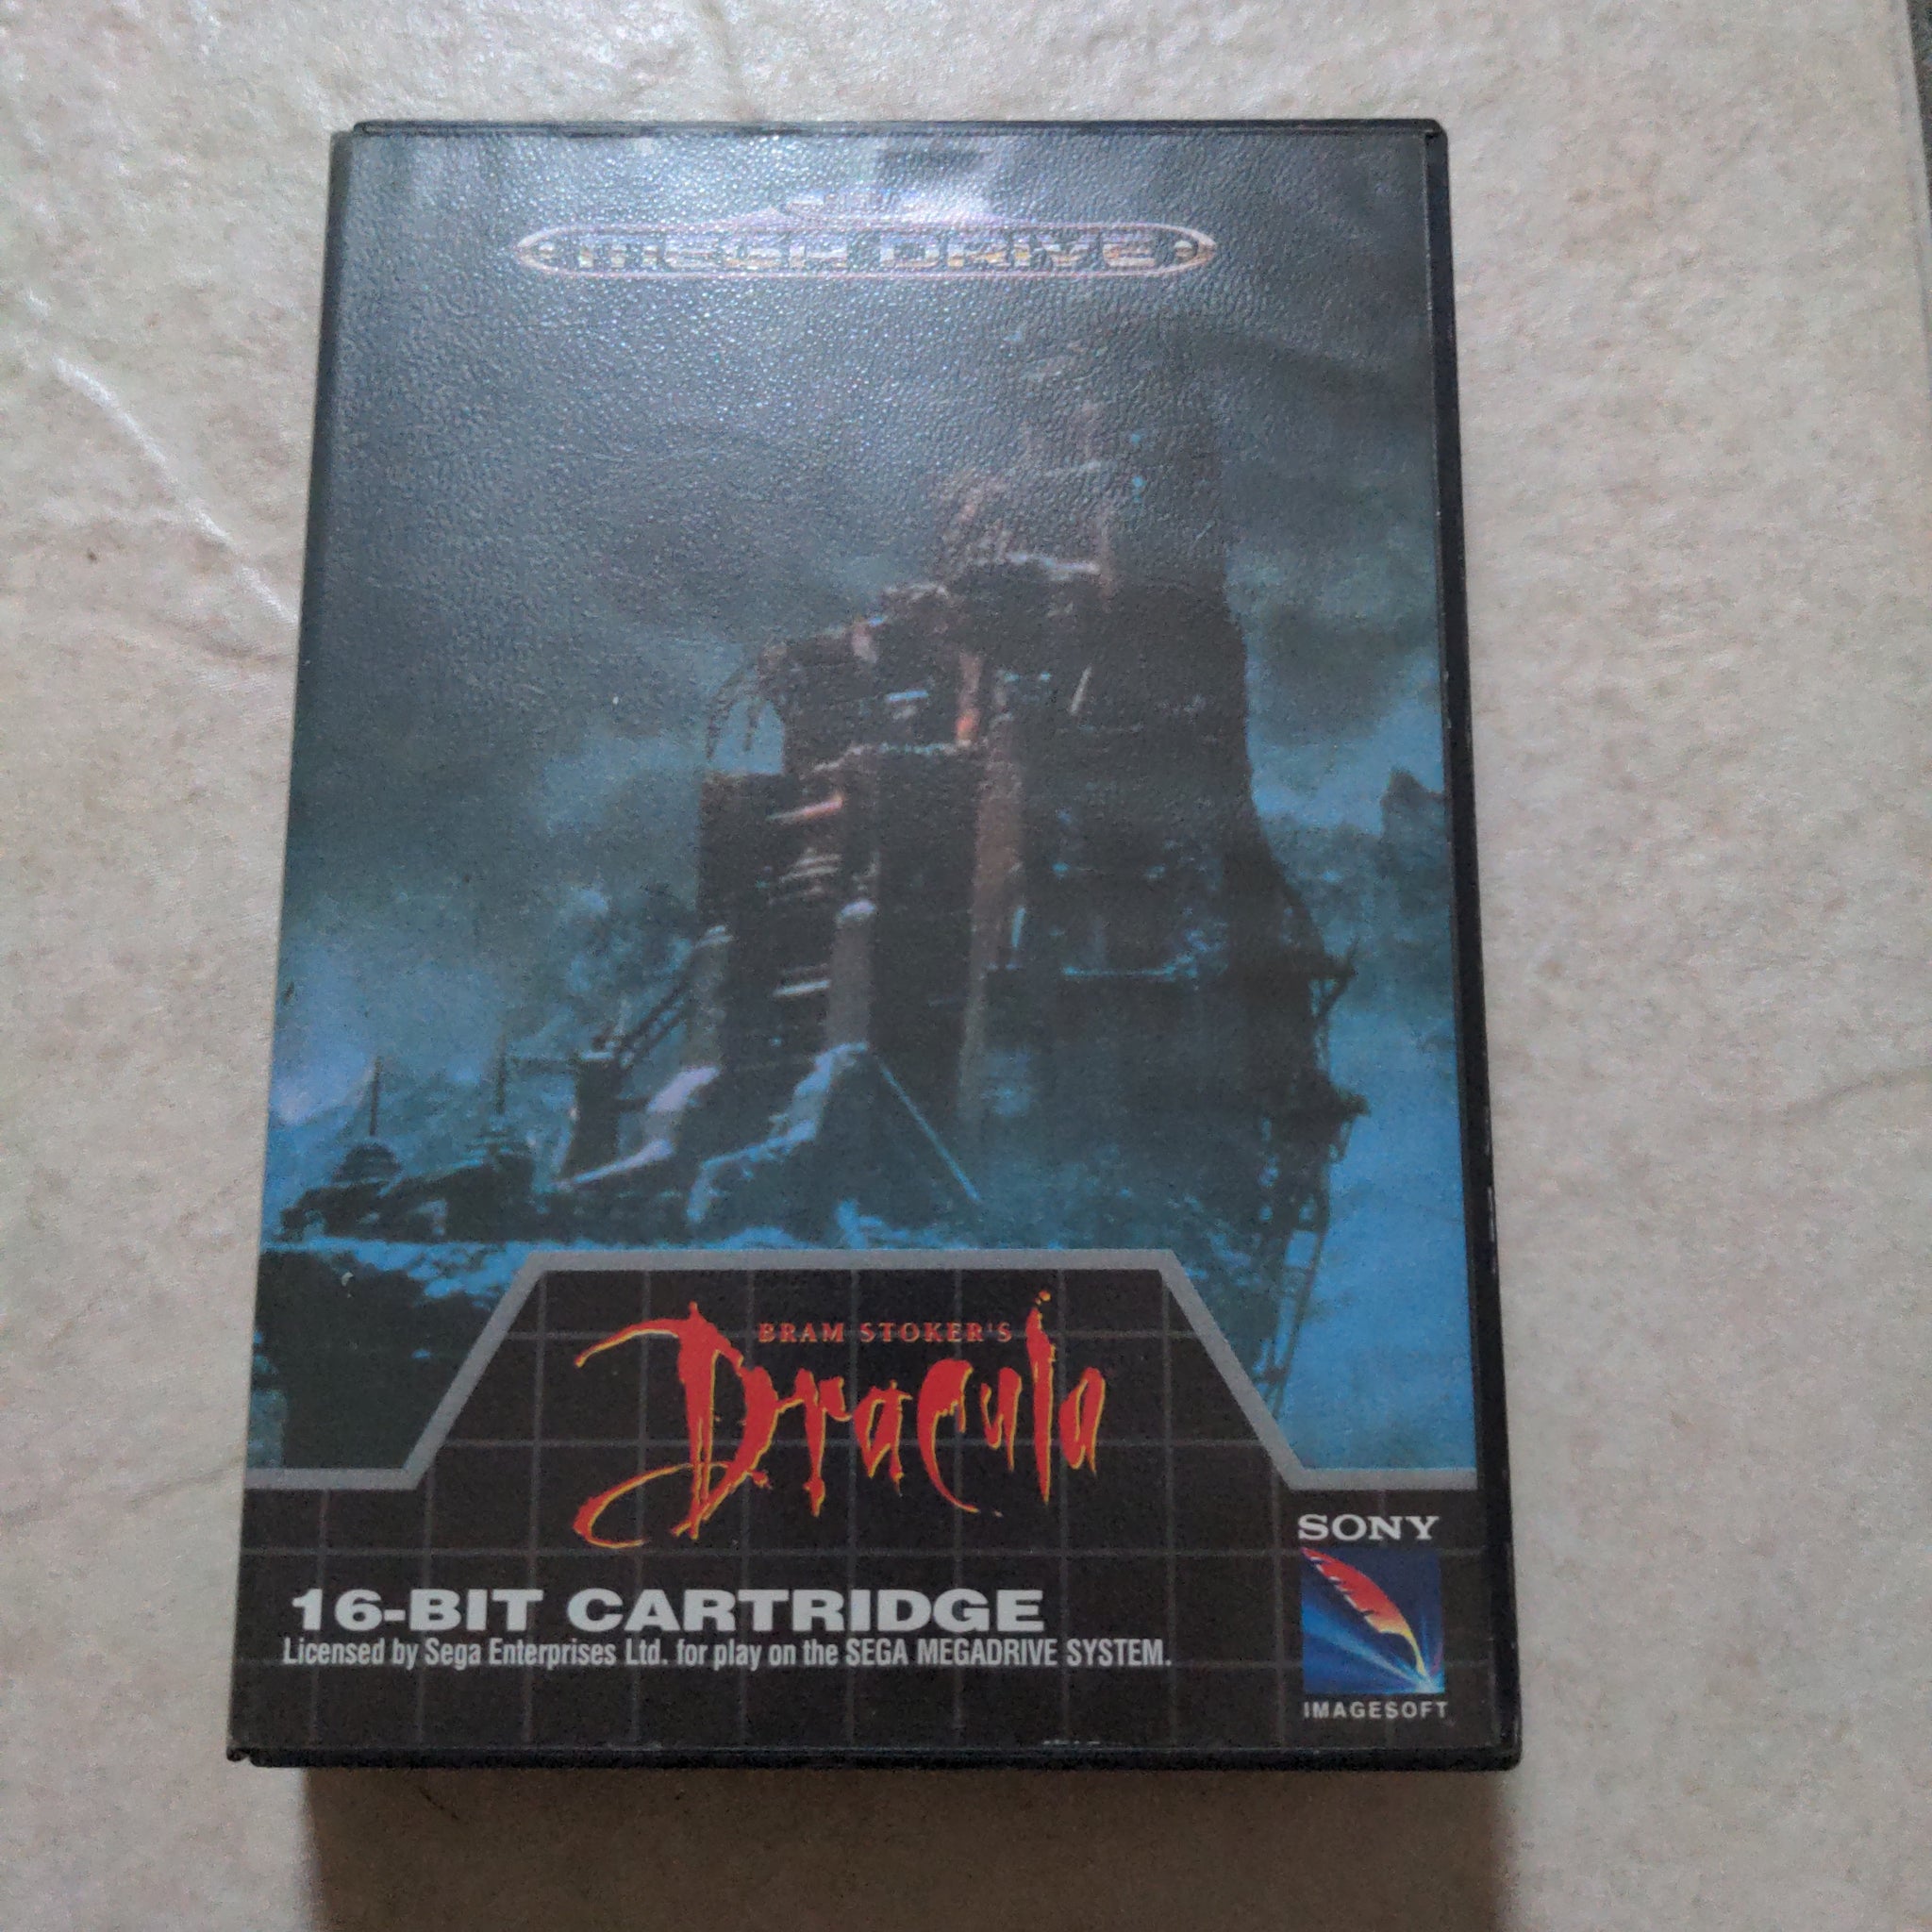 Bram Stoker's Dracula Sega Mega Drive game